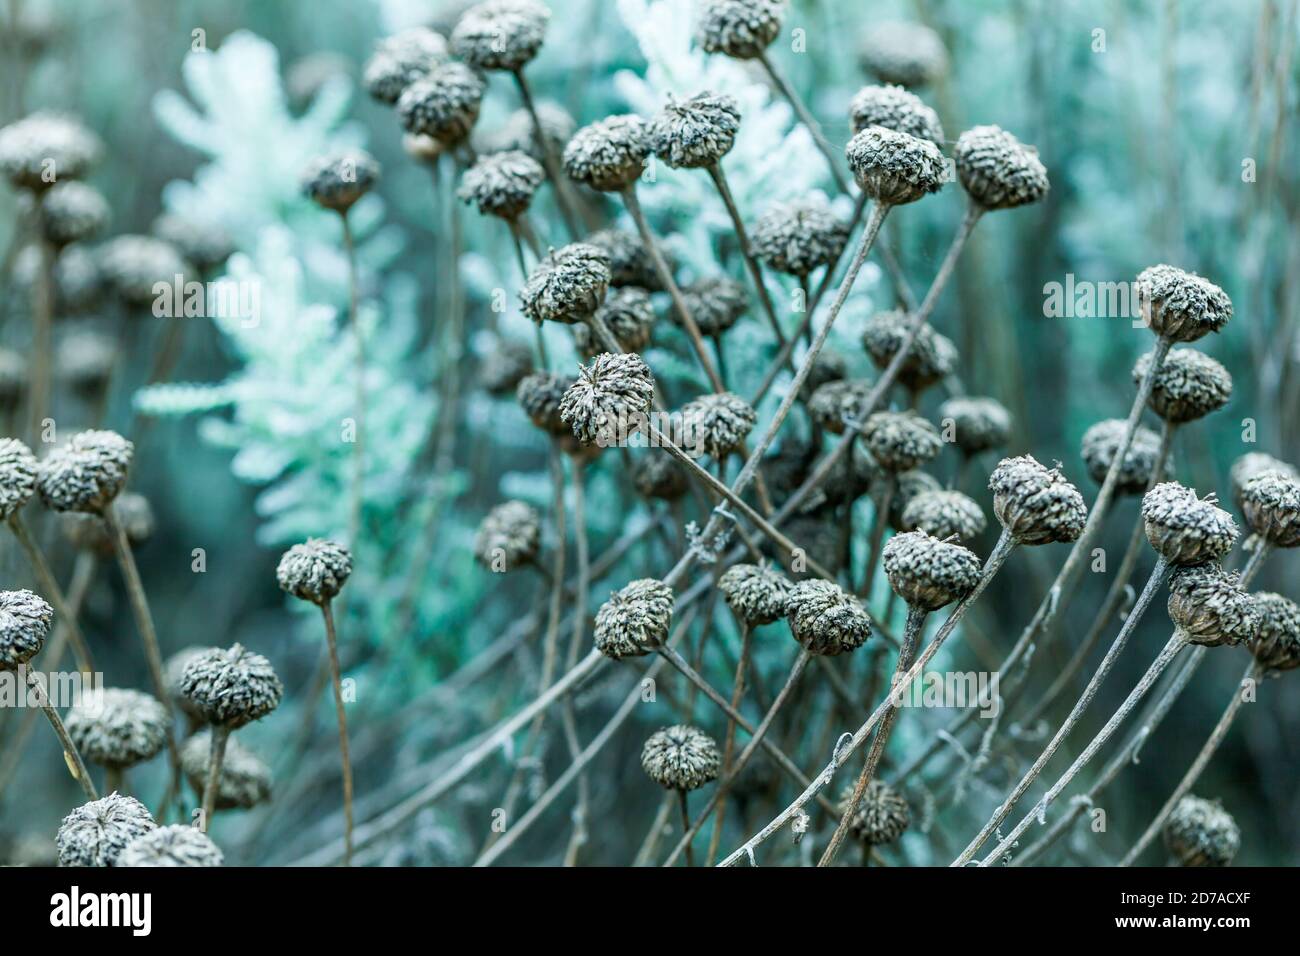 Garden Design structure / Botanics /Ethereal beauty / fine art concept - High-Resolution Close-up of seedheads,  Autumn Season . Stock Photo